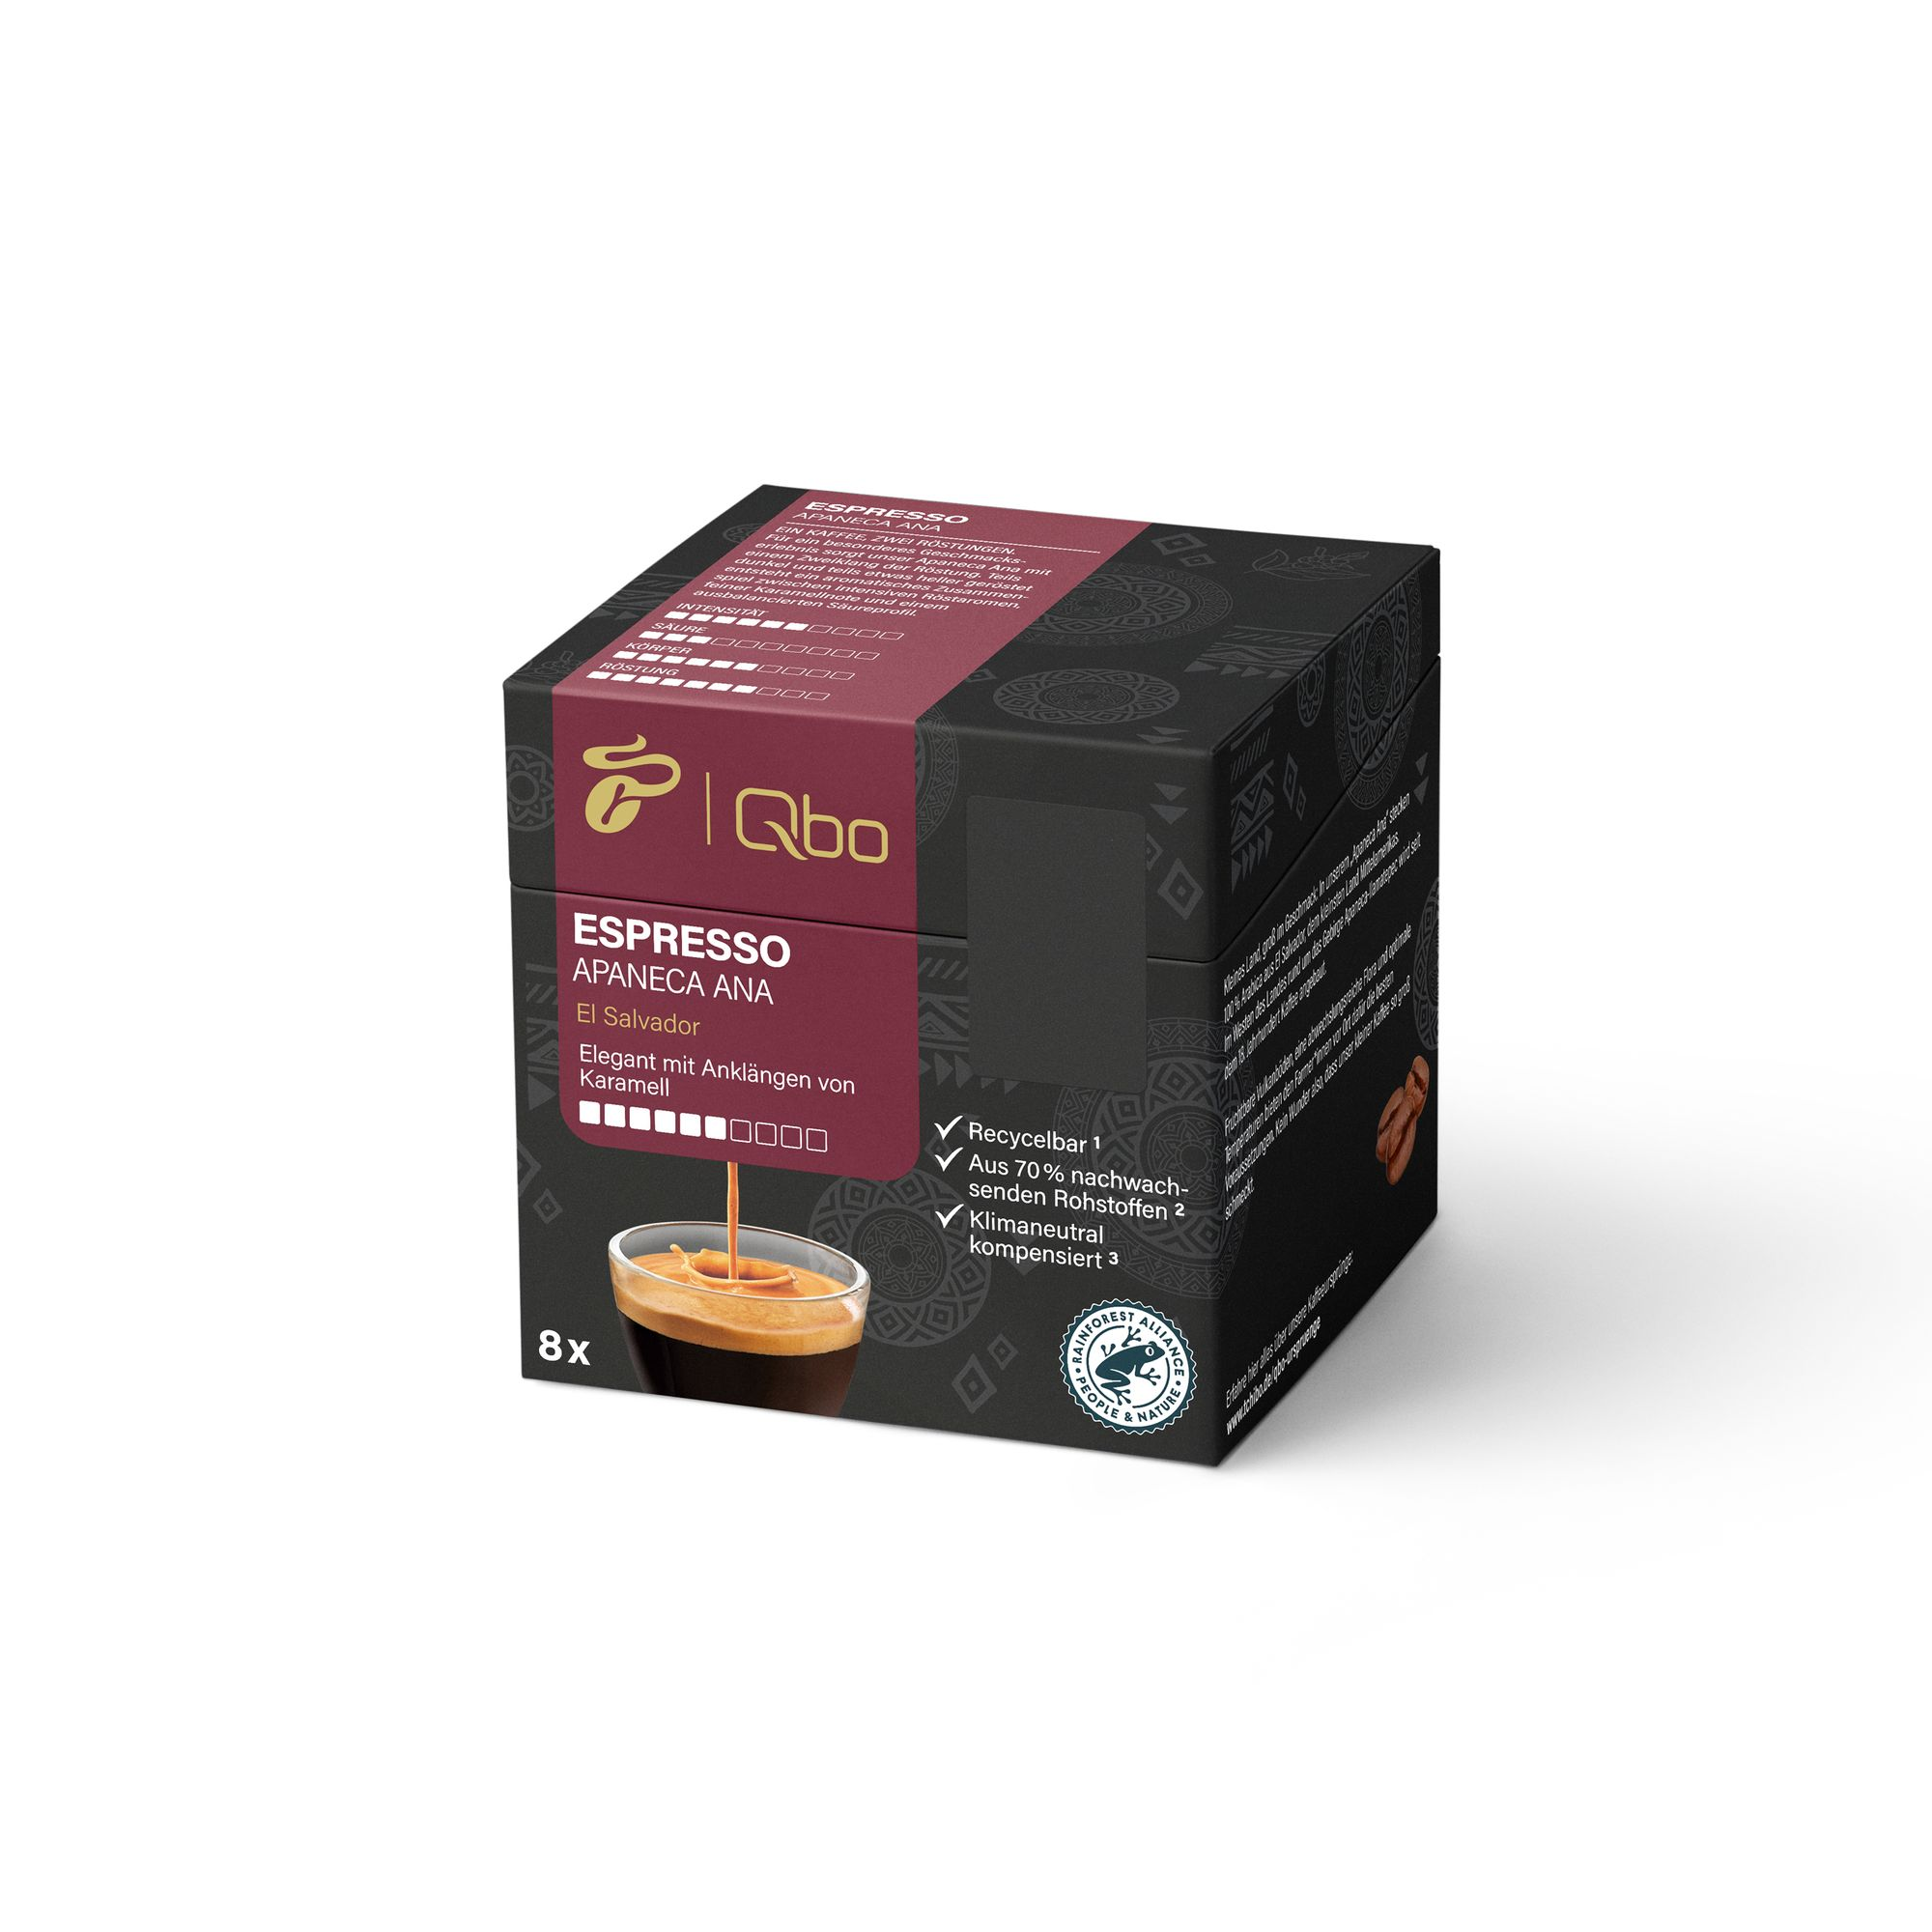 TCHIBO QBO 525903 144 Apaneca Qbo (Tchibo Espresso Kapselsystem) Ana Stück Kaffeekapseln